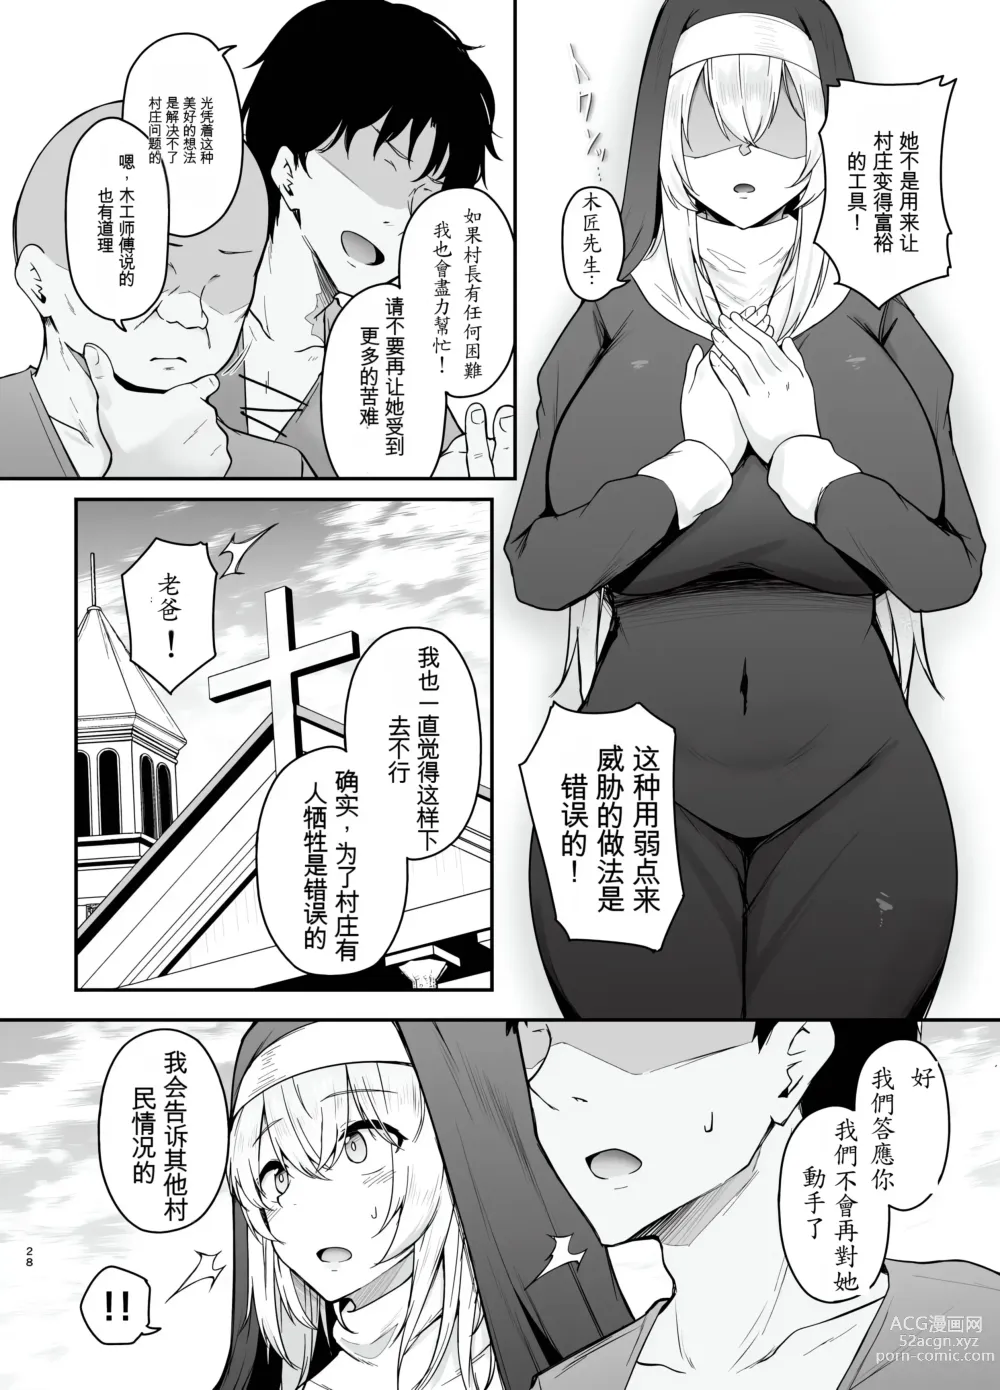 Page 27 of doujinshi 你討厭沒有品味的女人嗎?